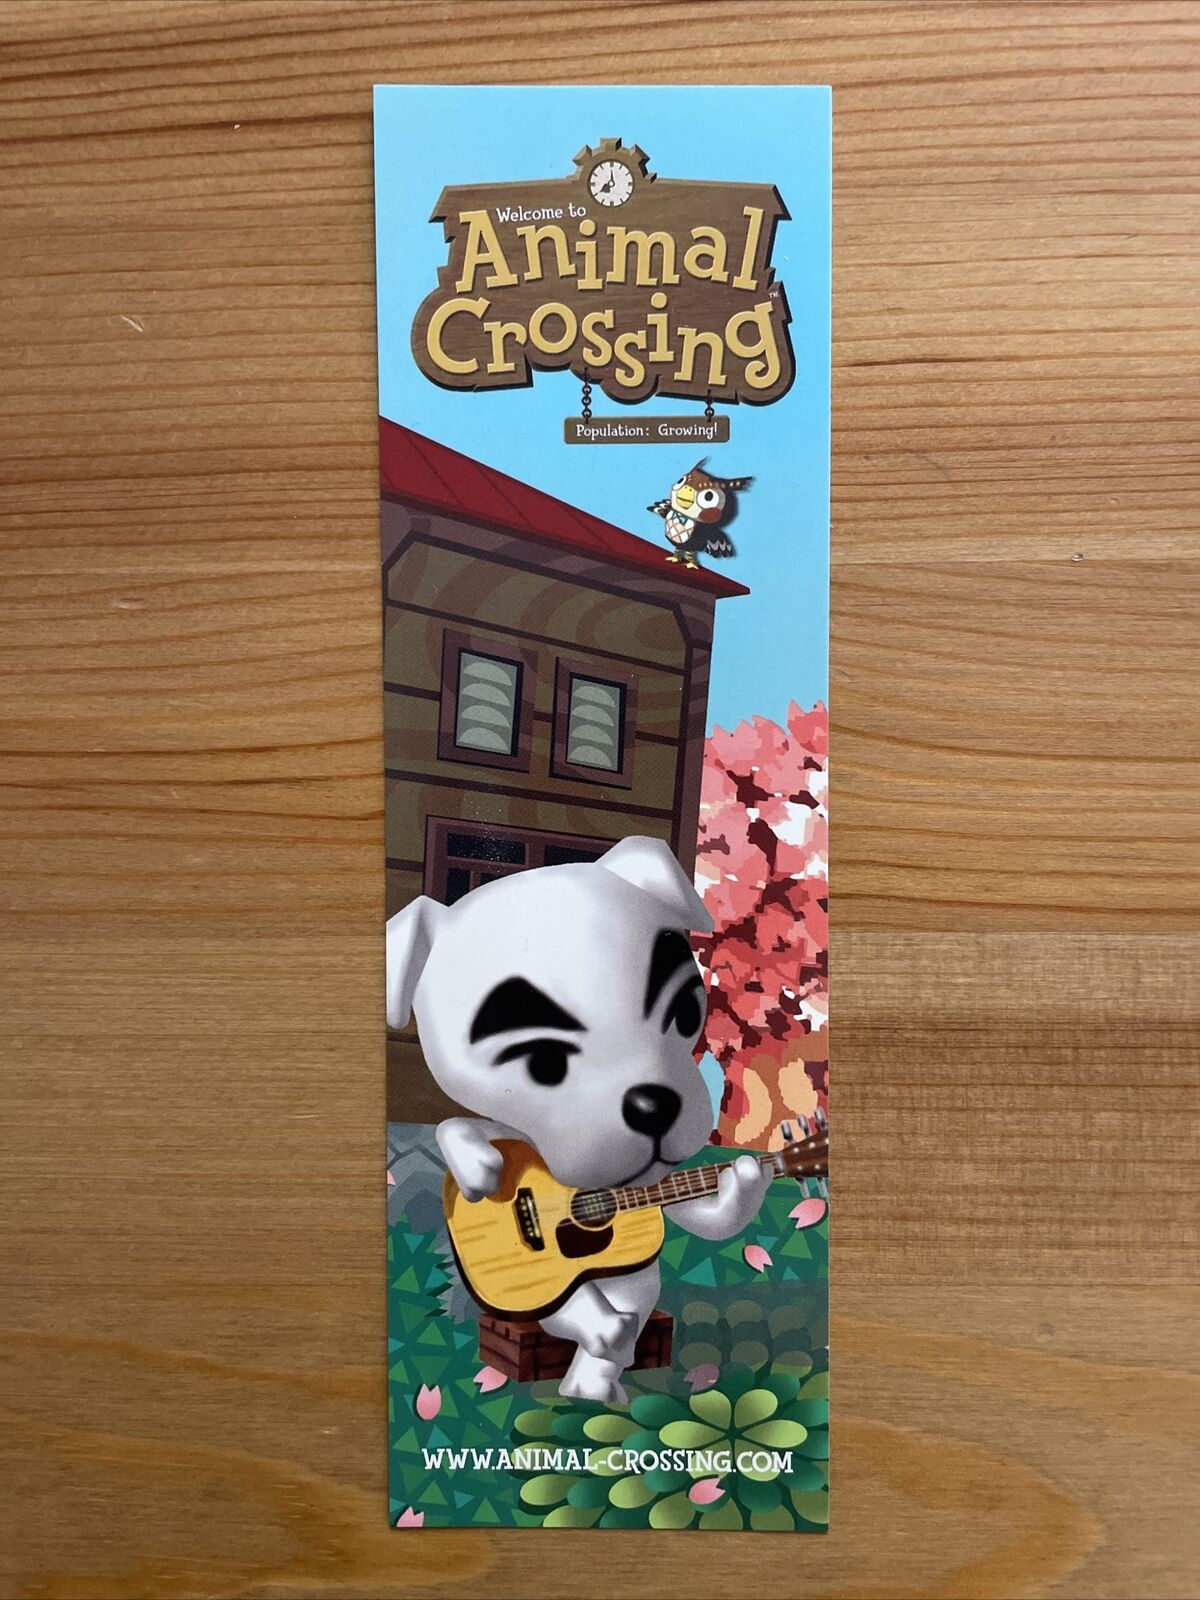 RARE Official Nintendo GameCube Promotional Animal Crossing KK Slider Bookmark